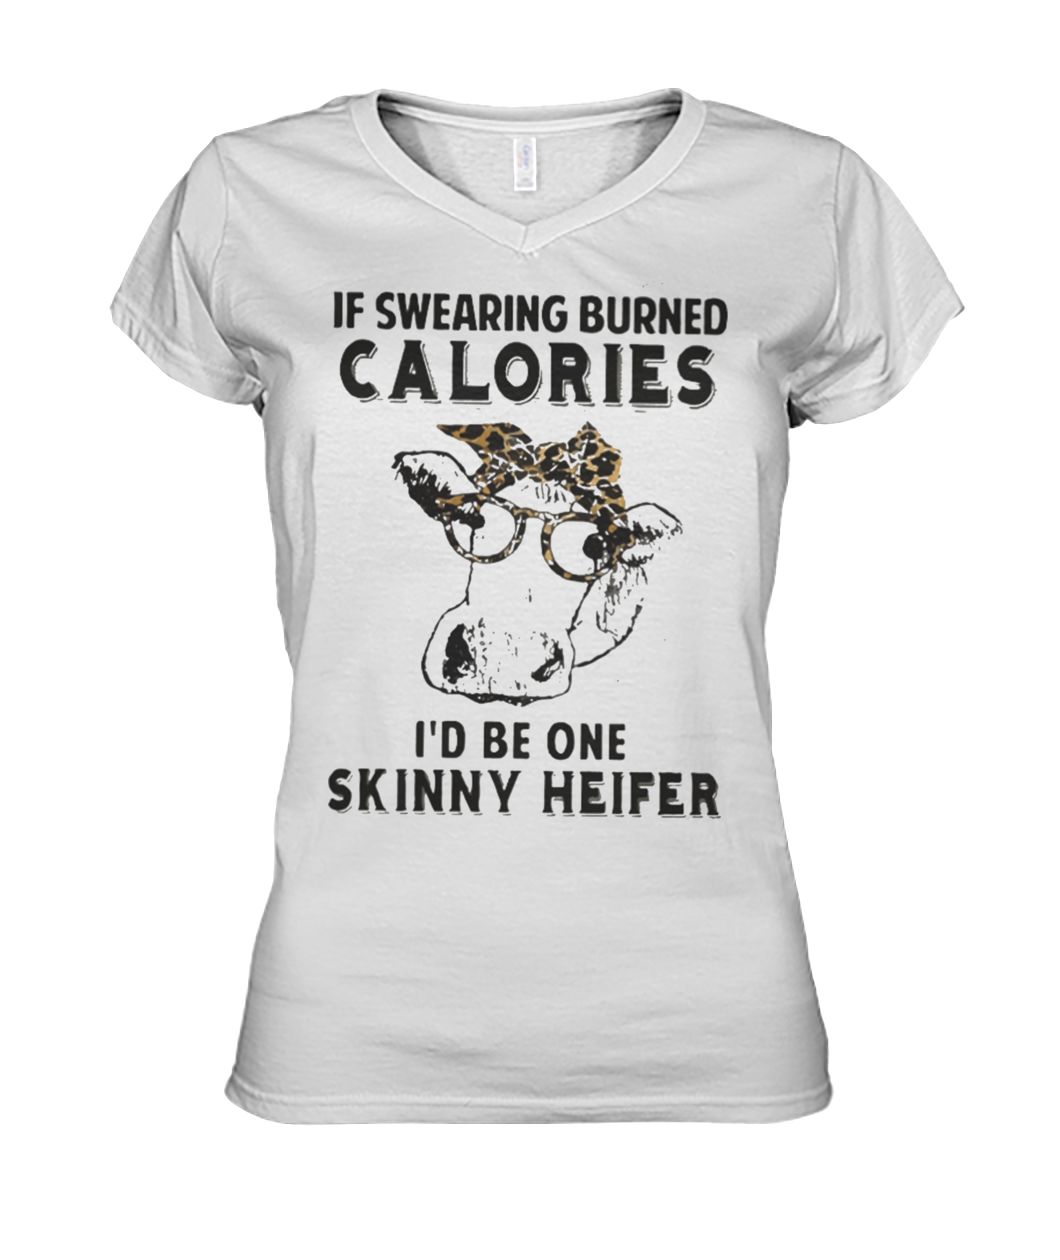 If swearing burned calories I'd be one skinny heifer women's v-neck